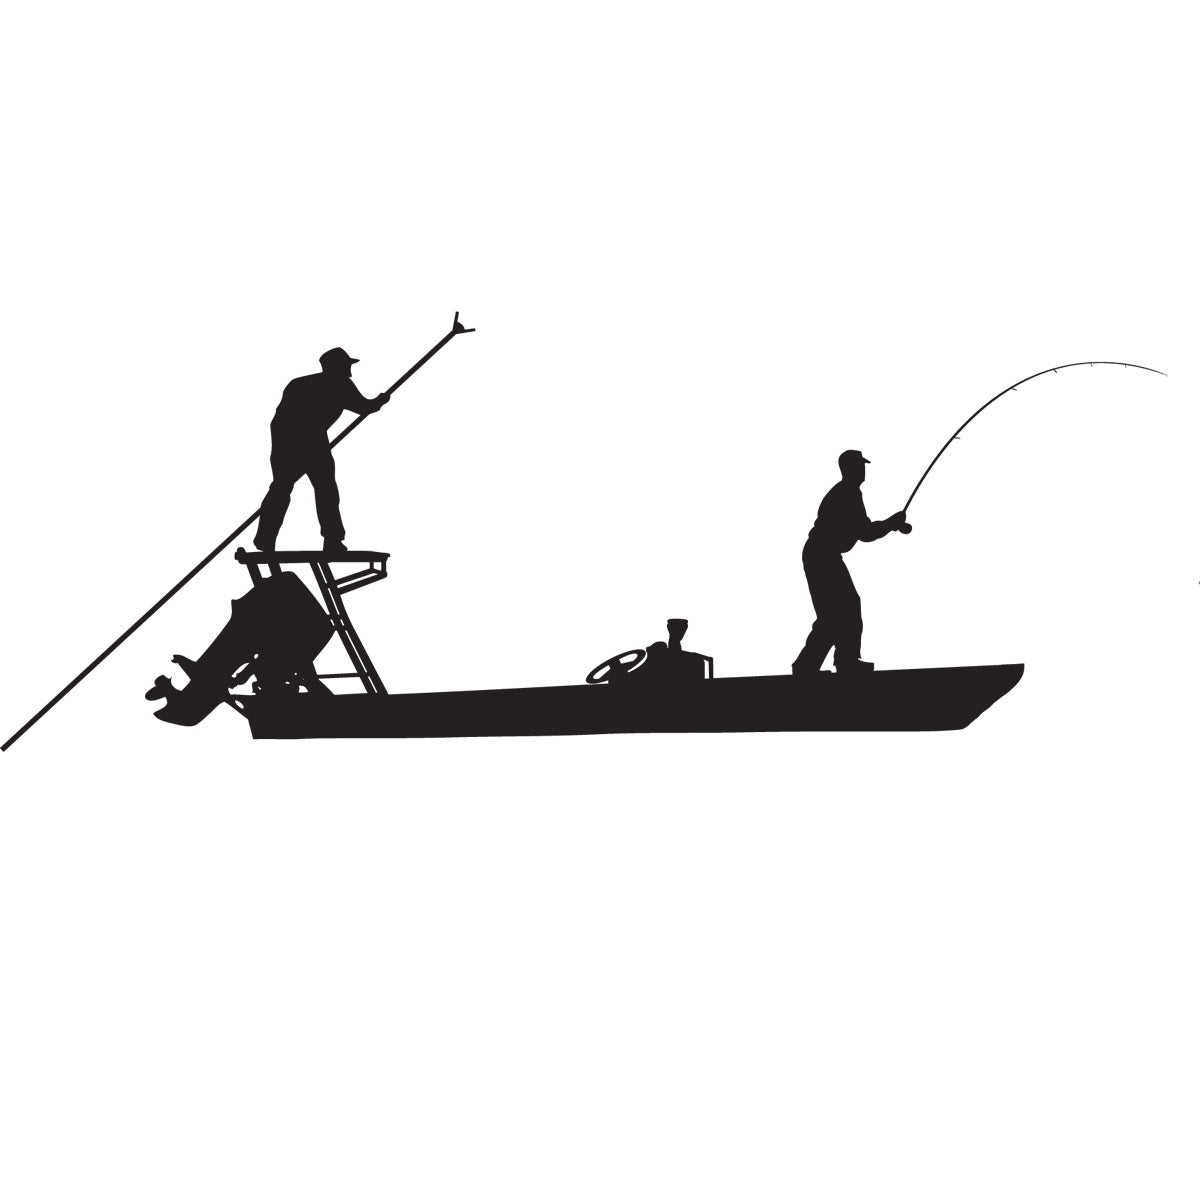  Fishing Pole Decal, Fishing Pole Sticker, Fishing Rod Decal, Fishing  Decal, Fishing Sticker, Fisherman Decal, Fisherman Sticker, Pole Decal